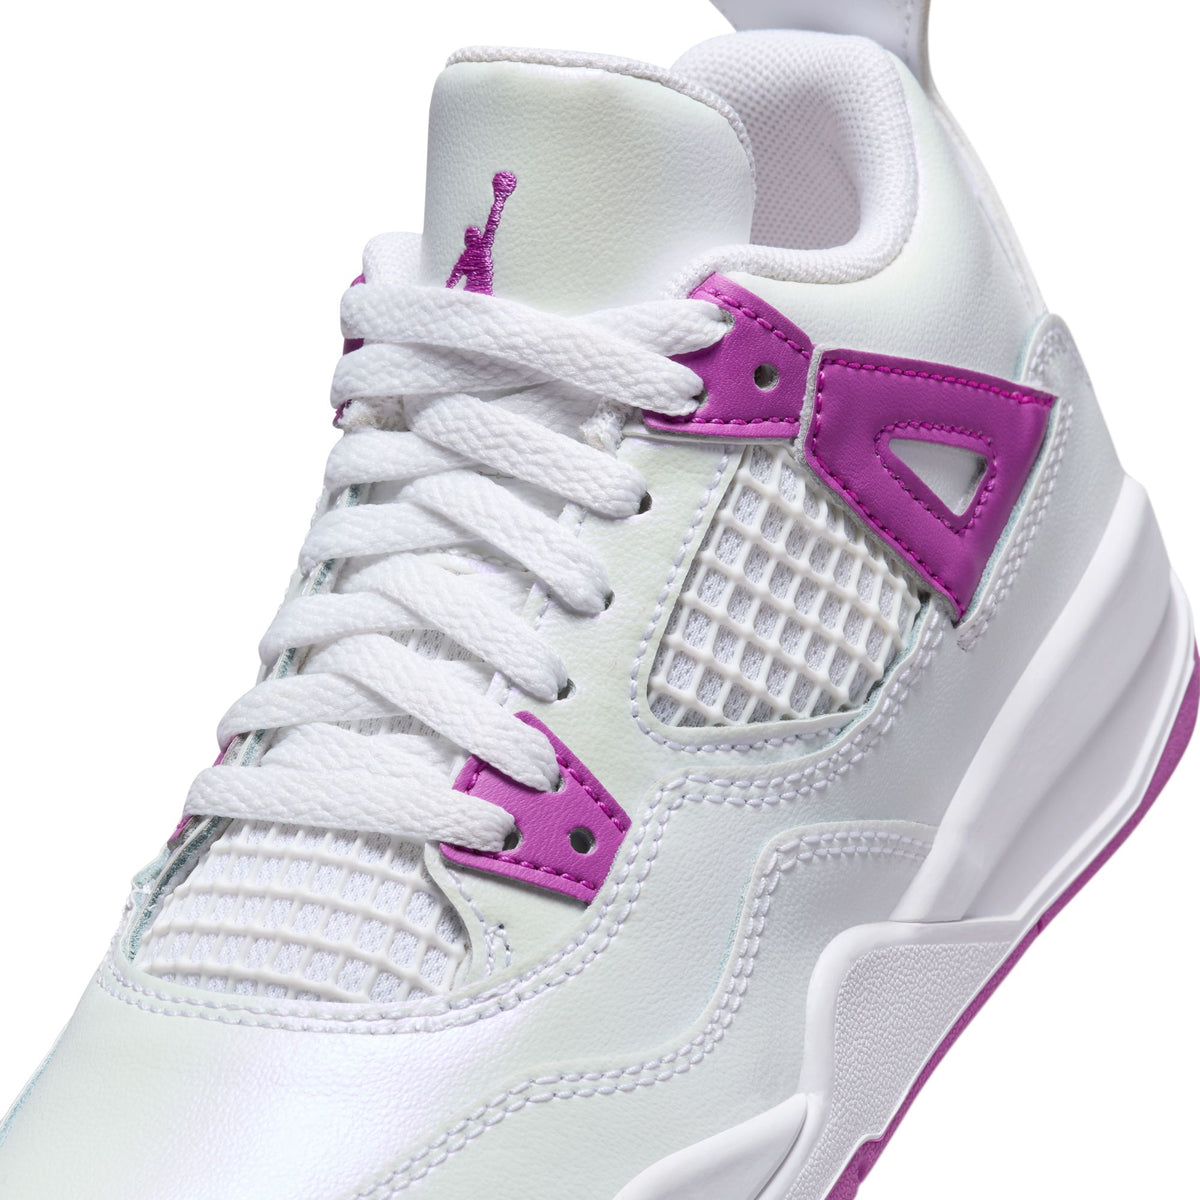 Air Jordan 4 Retro "Hyper Violet" Pre School - Kids